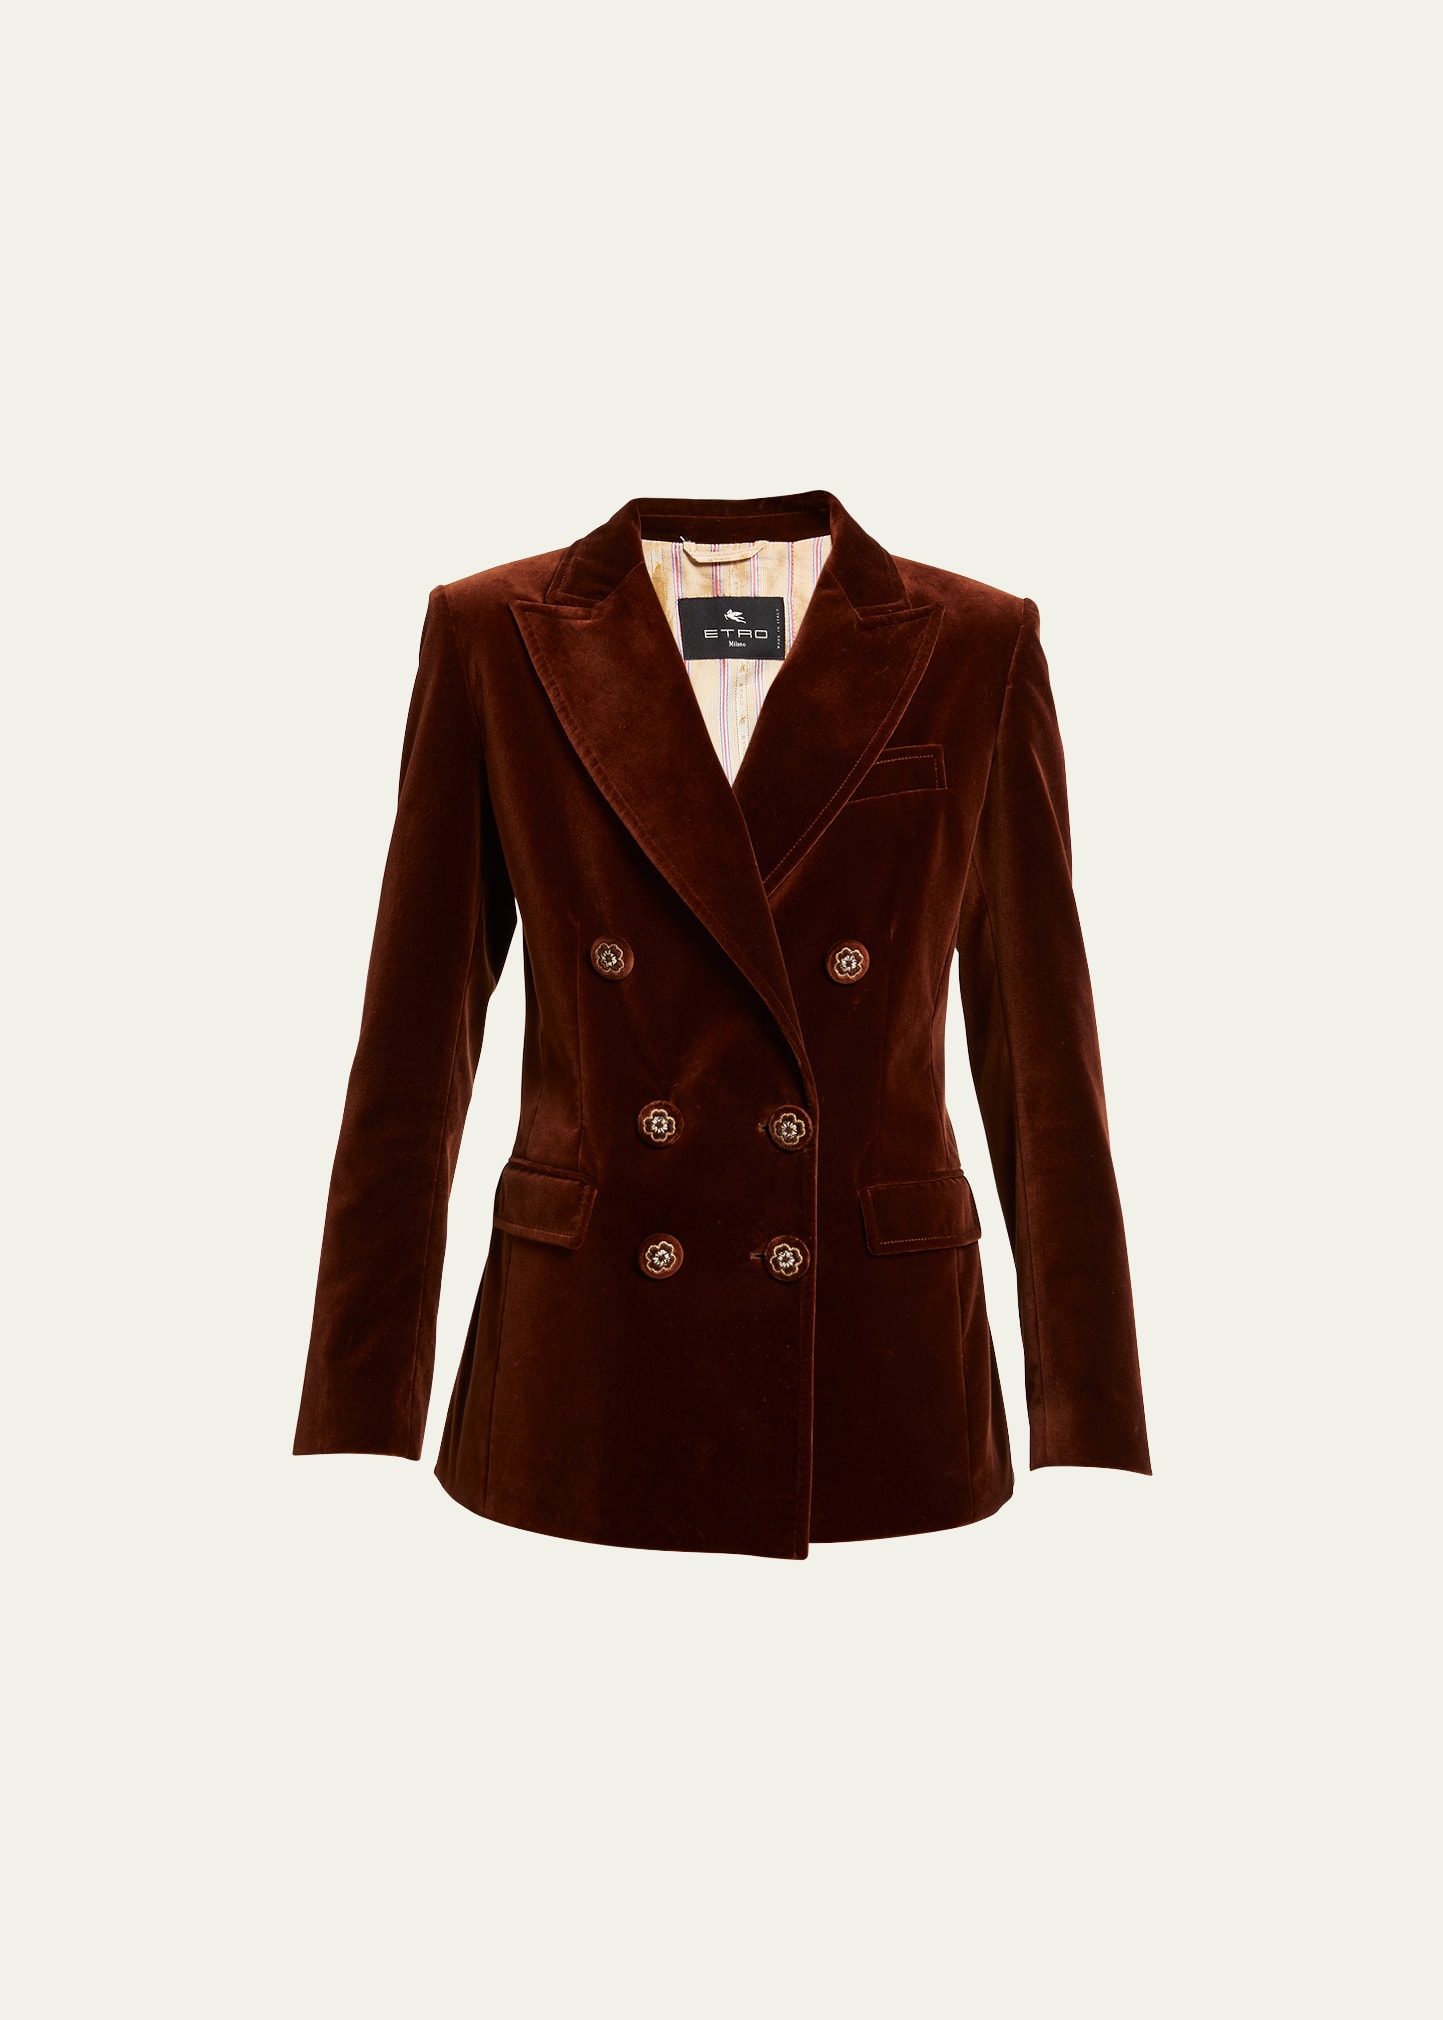 Etro Velvet Blazer Jacket With Detailed Buttons In Brown